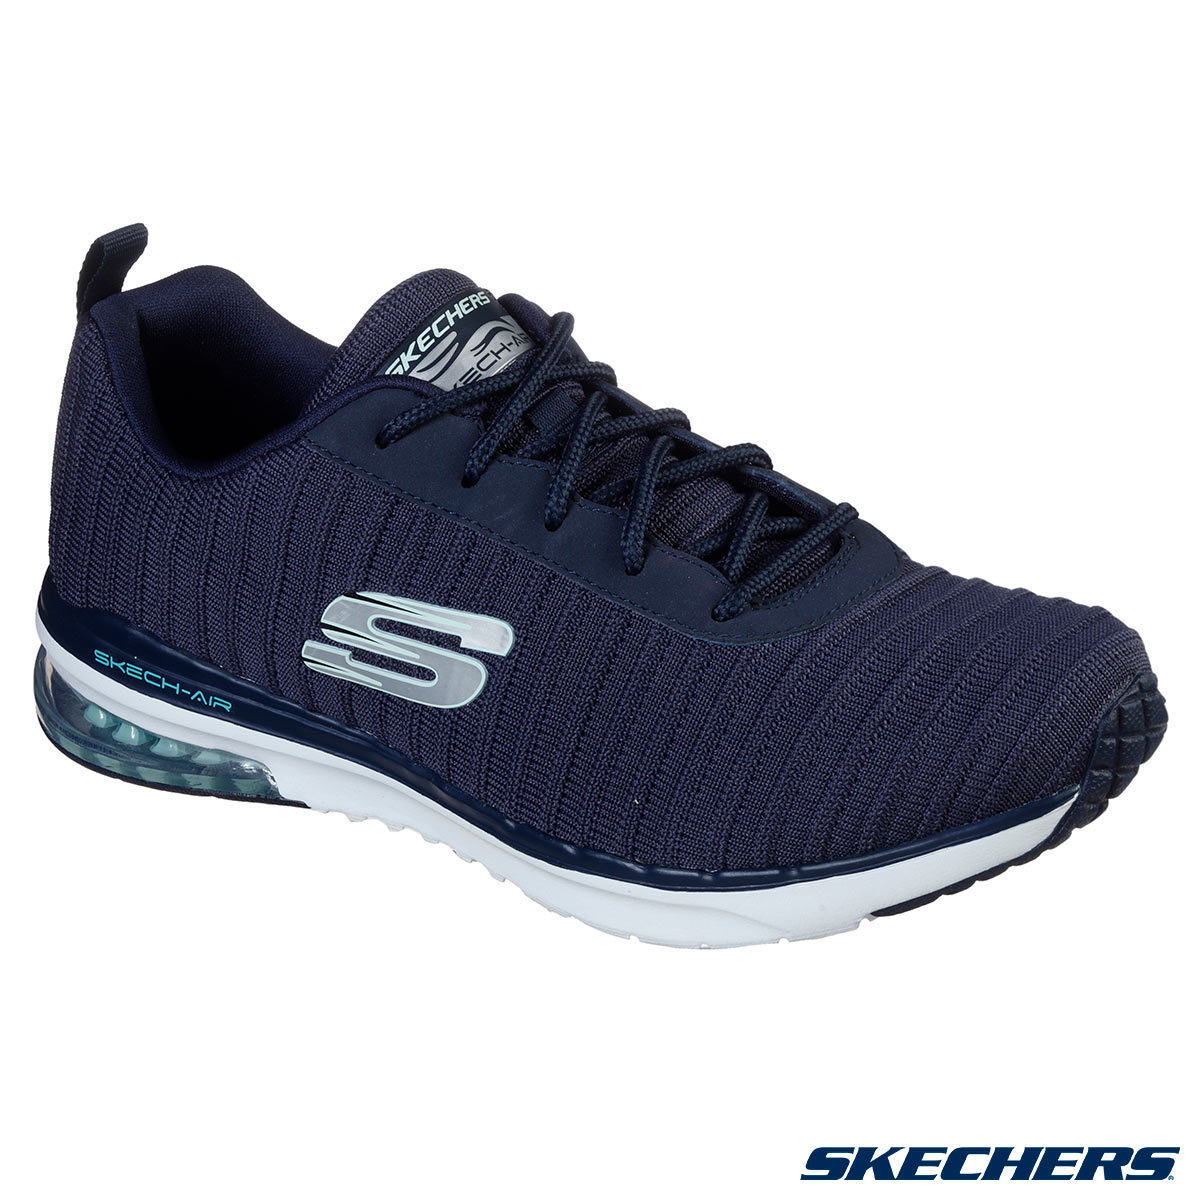 skechers navy blue shoes